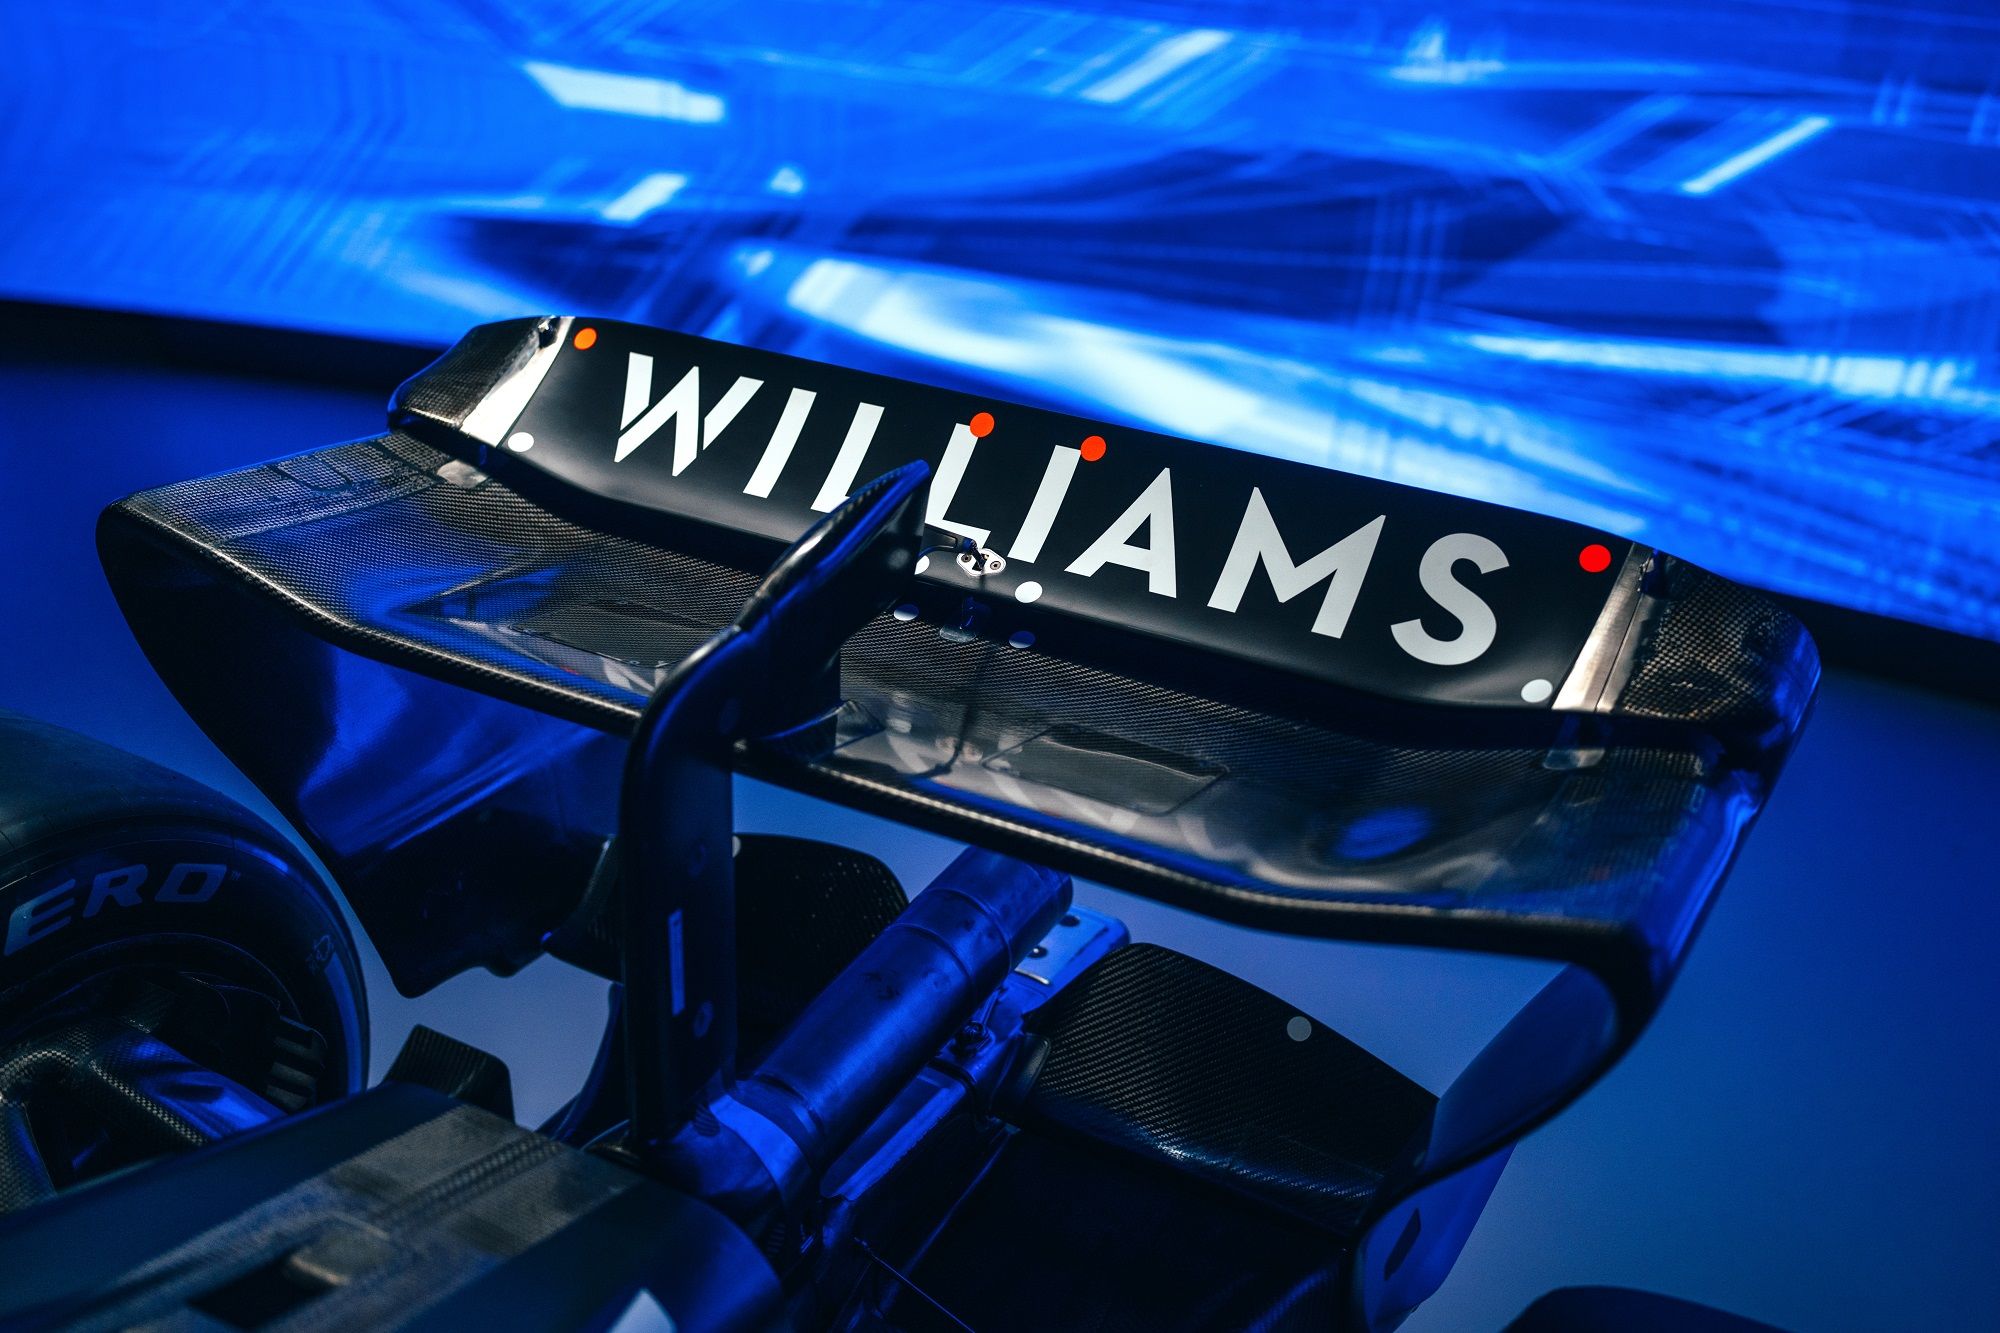 James Vowles, Williams, F1